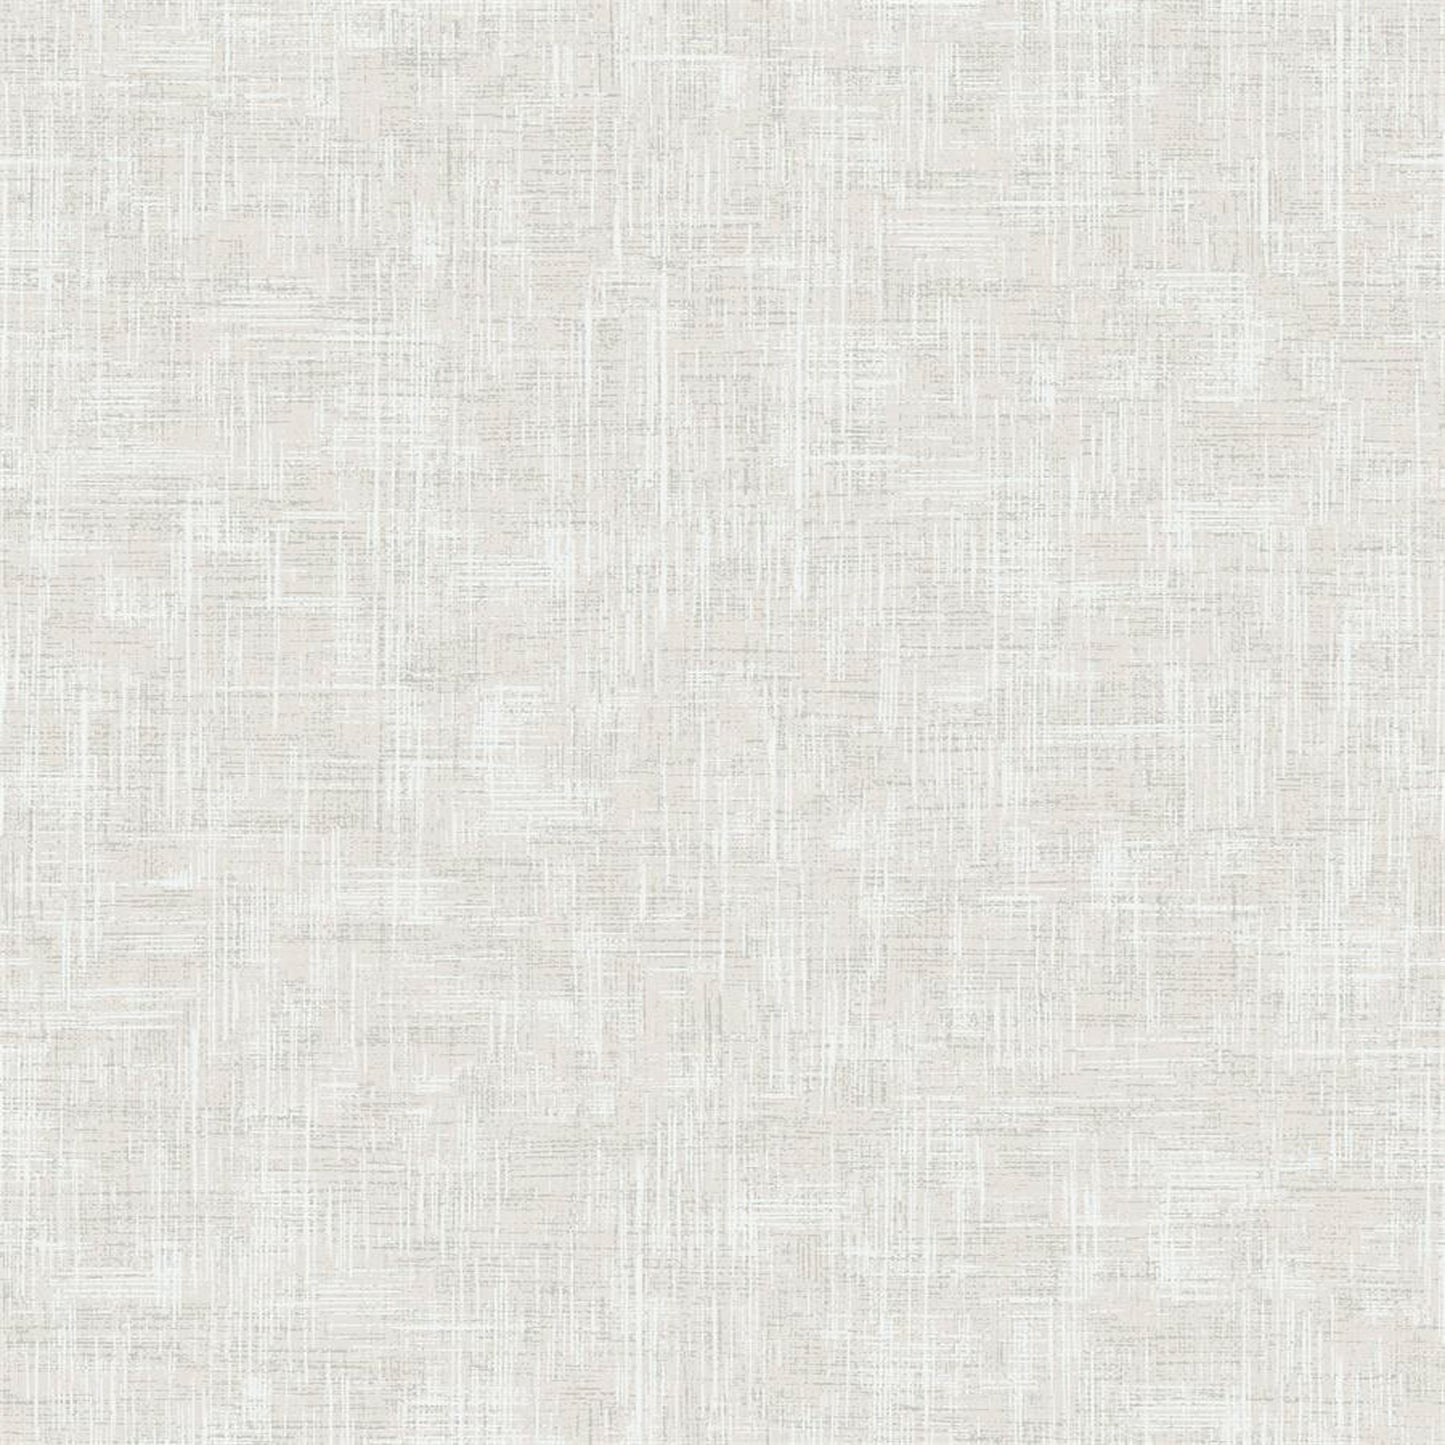 Minimalist Criss-Cross Weave Wallpaper